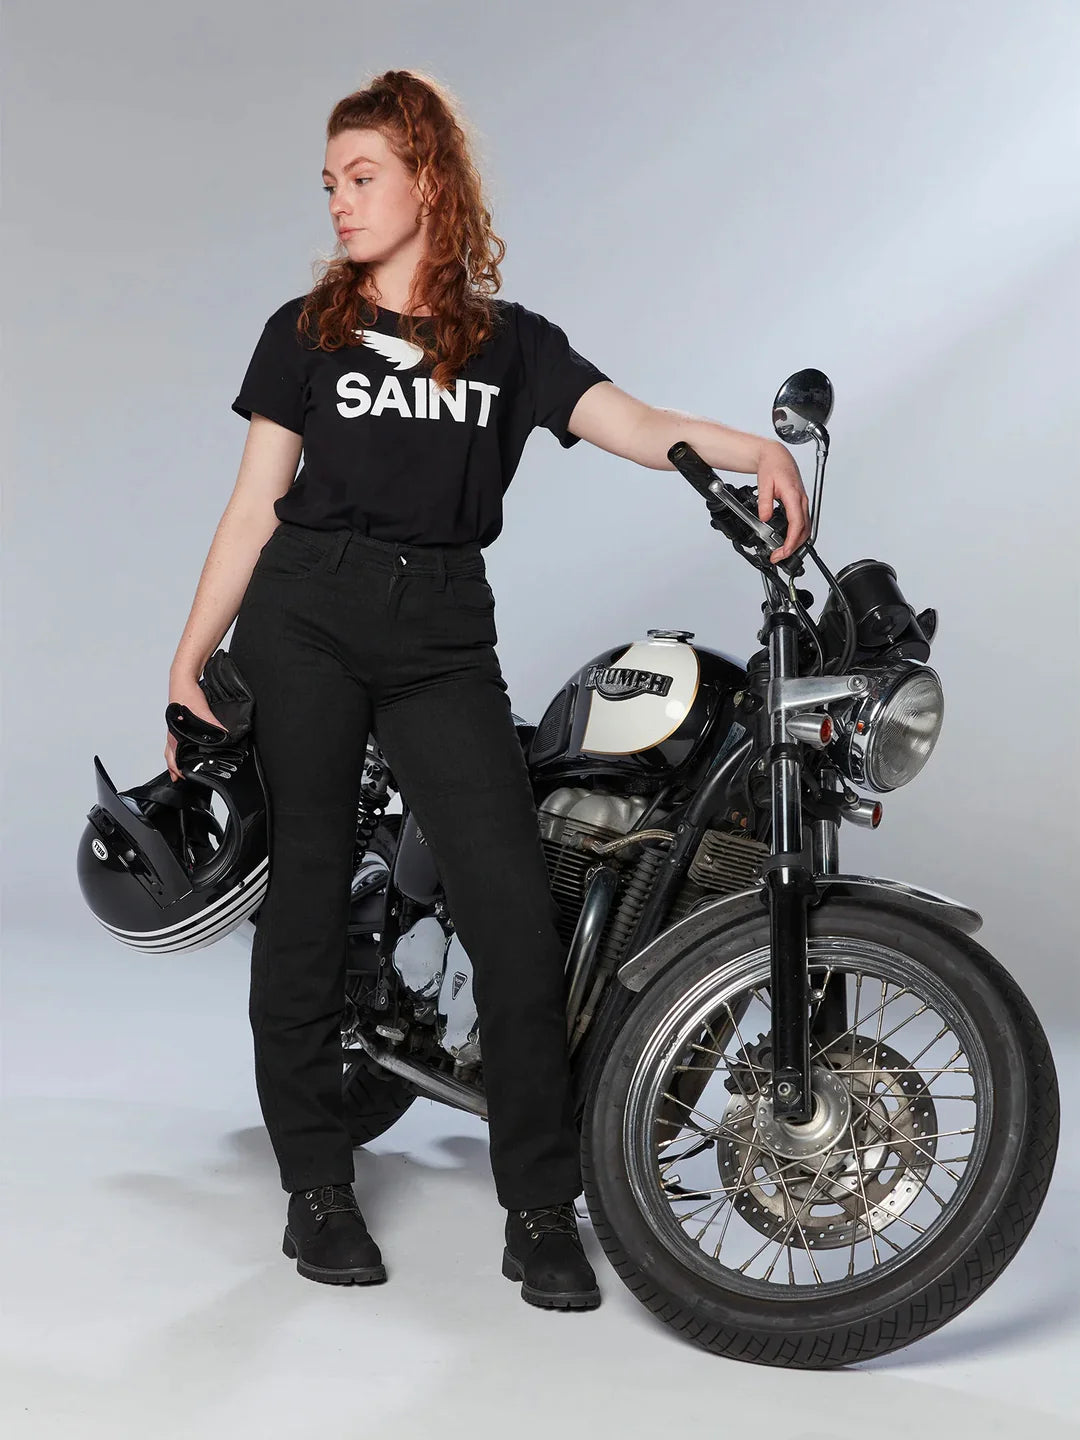 Women's Engineered Straight Fit Armored Jean - Saint USA